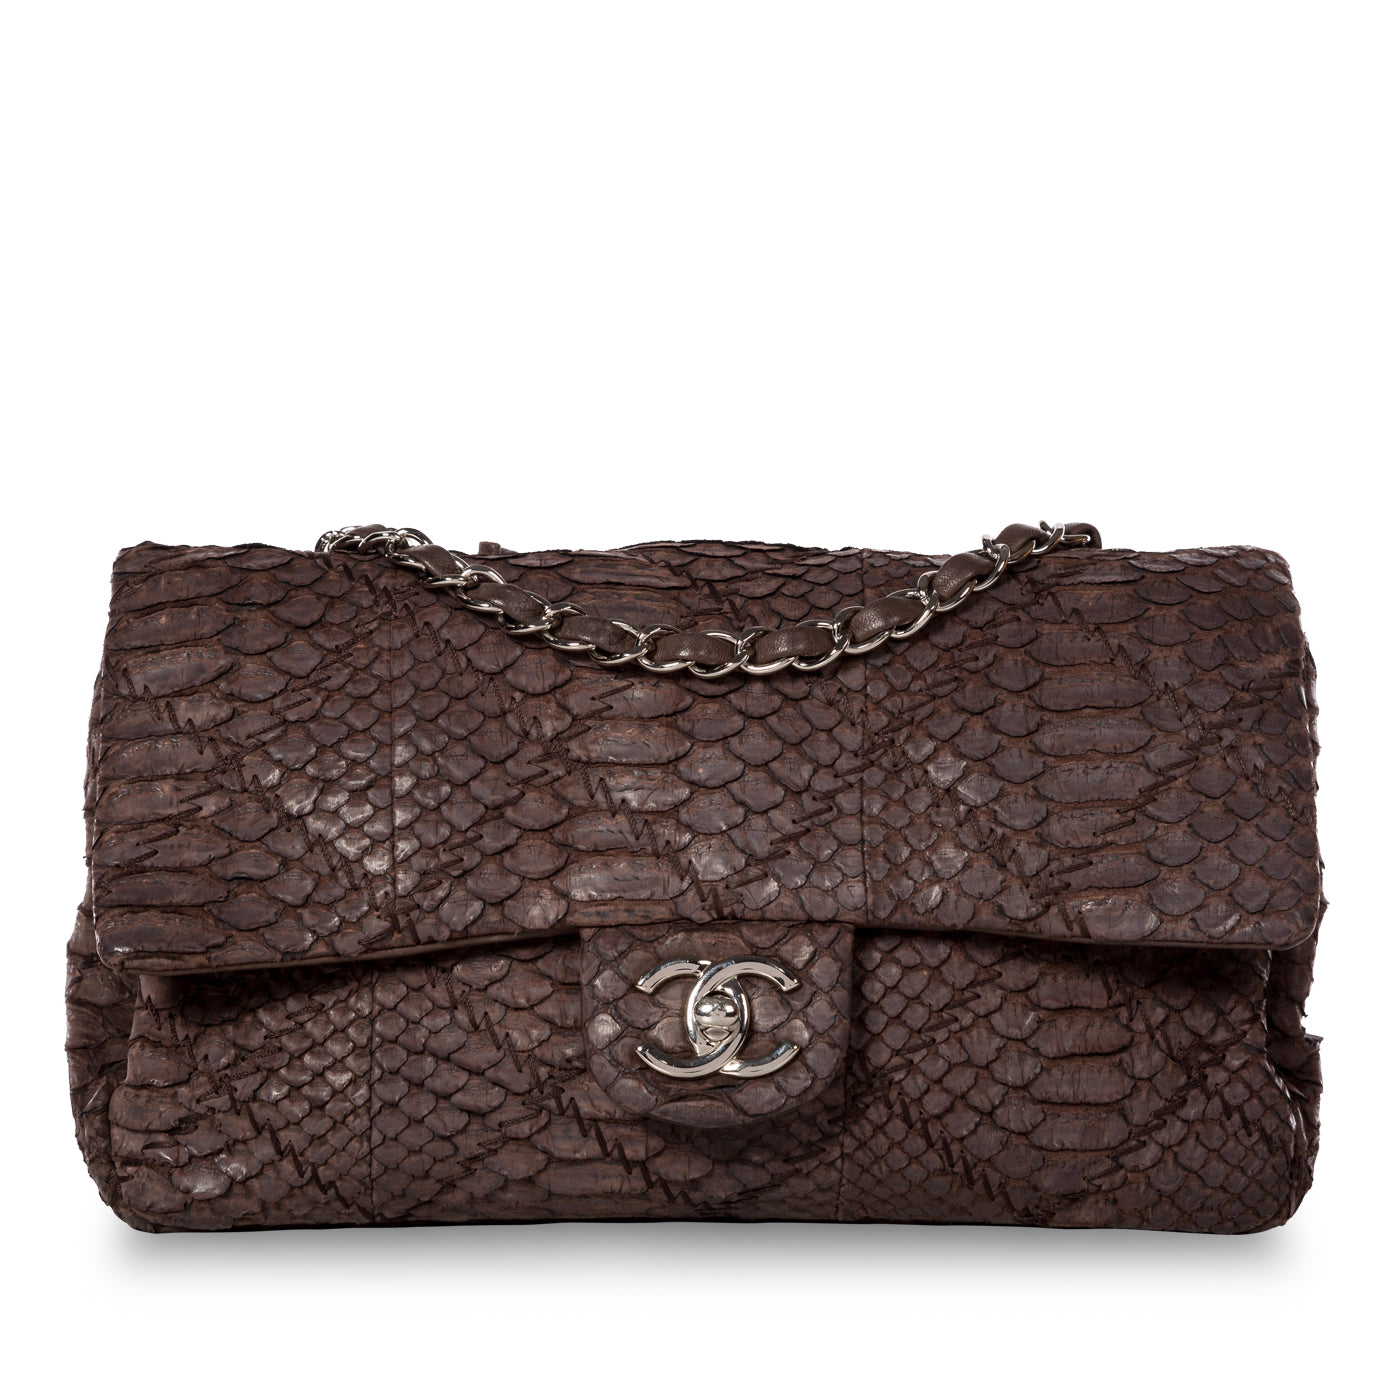 Chanel - Python Flap Bag - Brown - Vintage